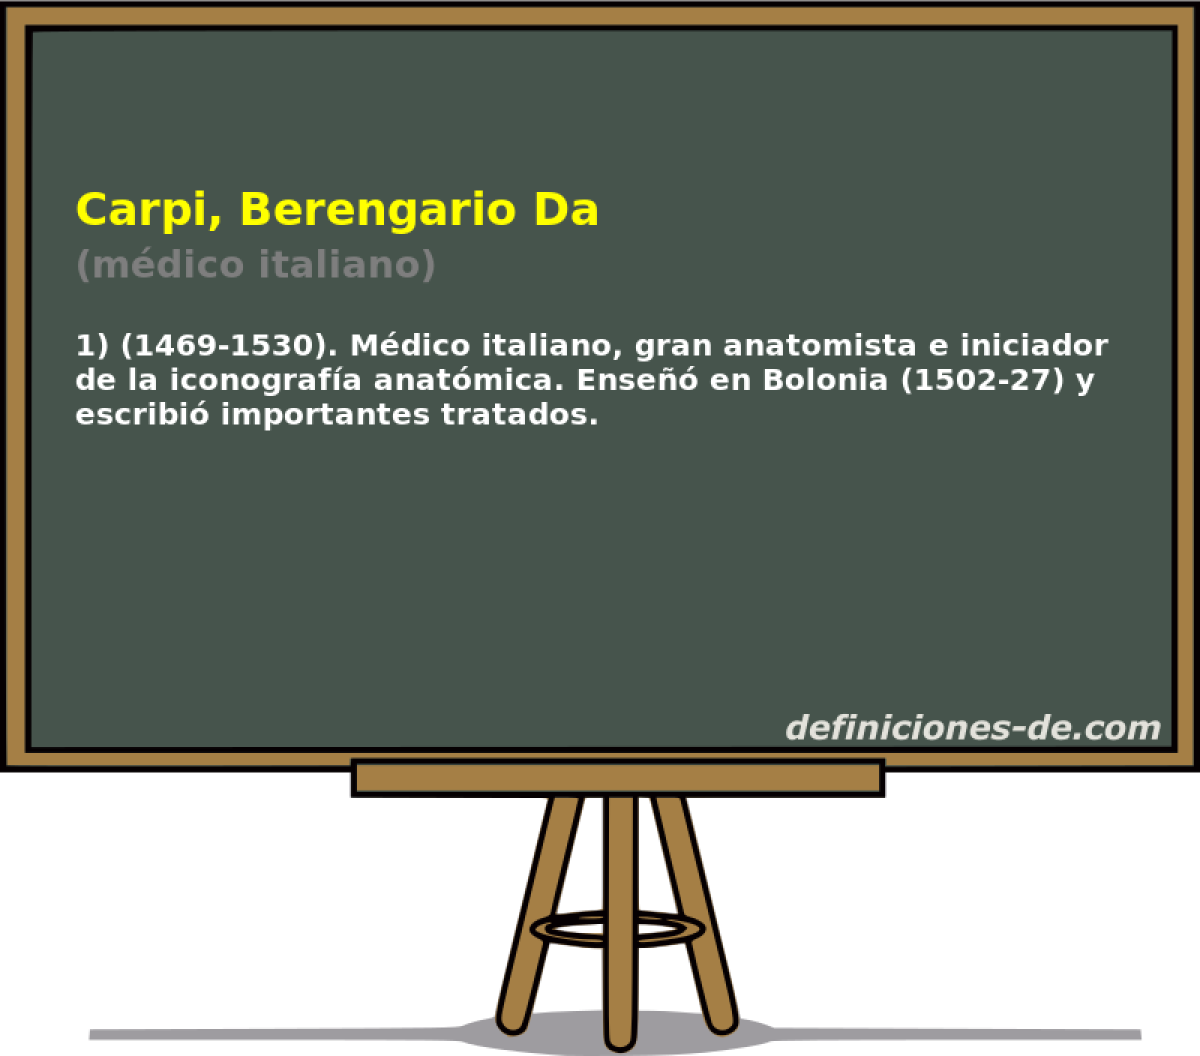 Carpi, Berengario Da (mdico italiano)